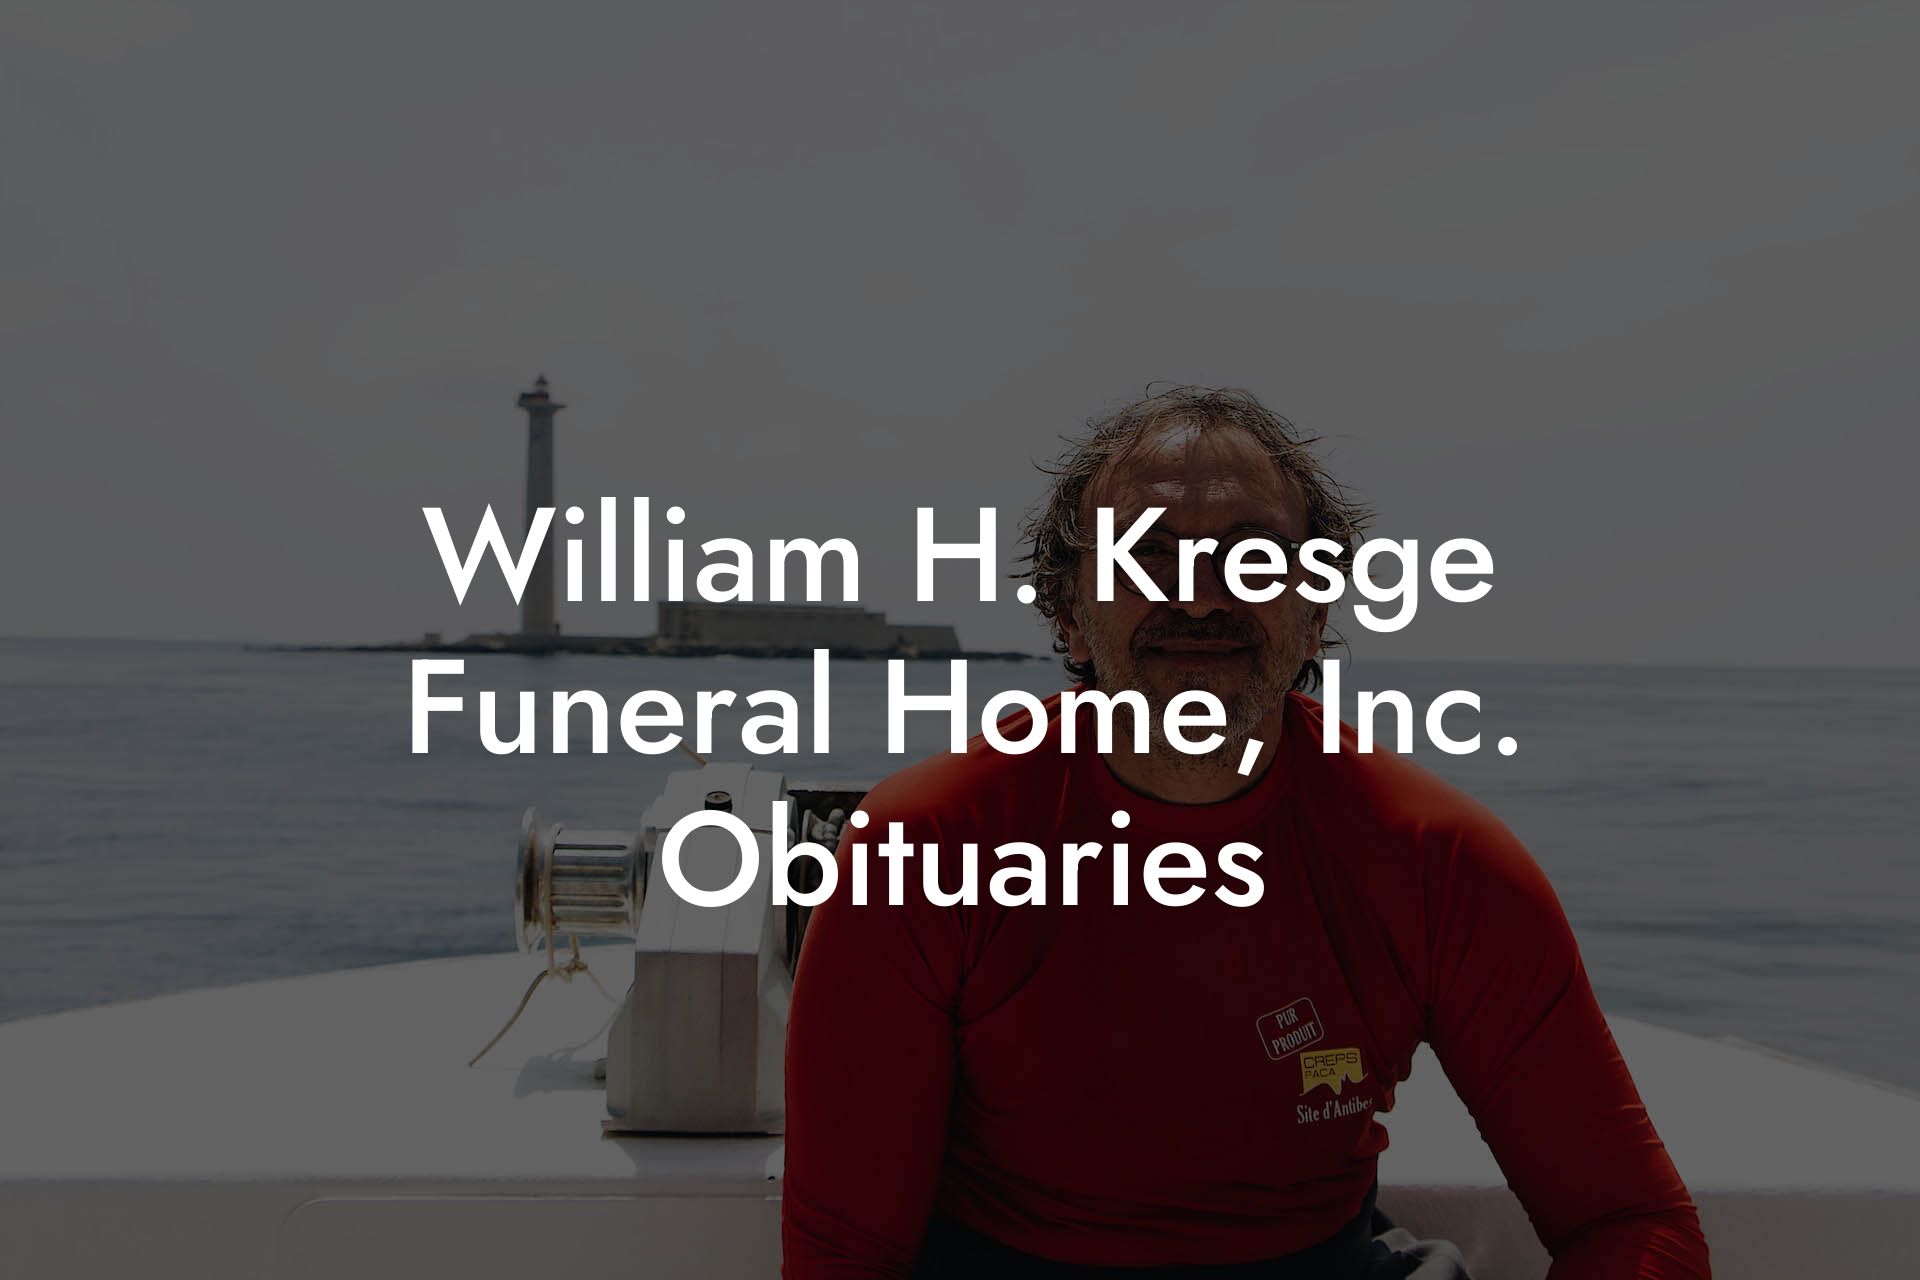 William H. Kresge Funeral Home, Inc. Obituaries